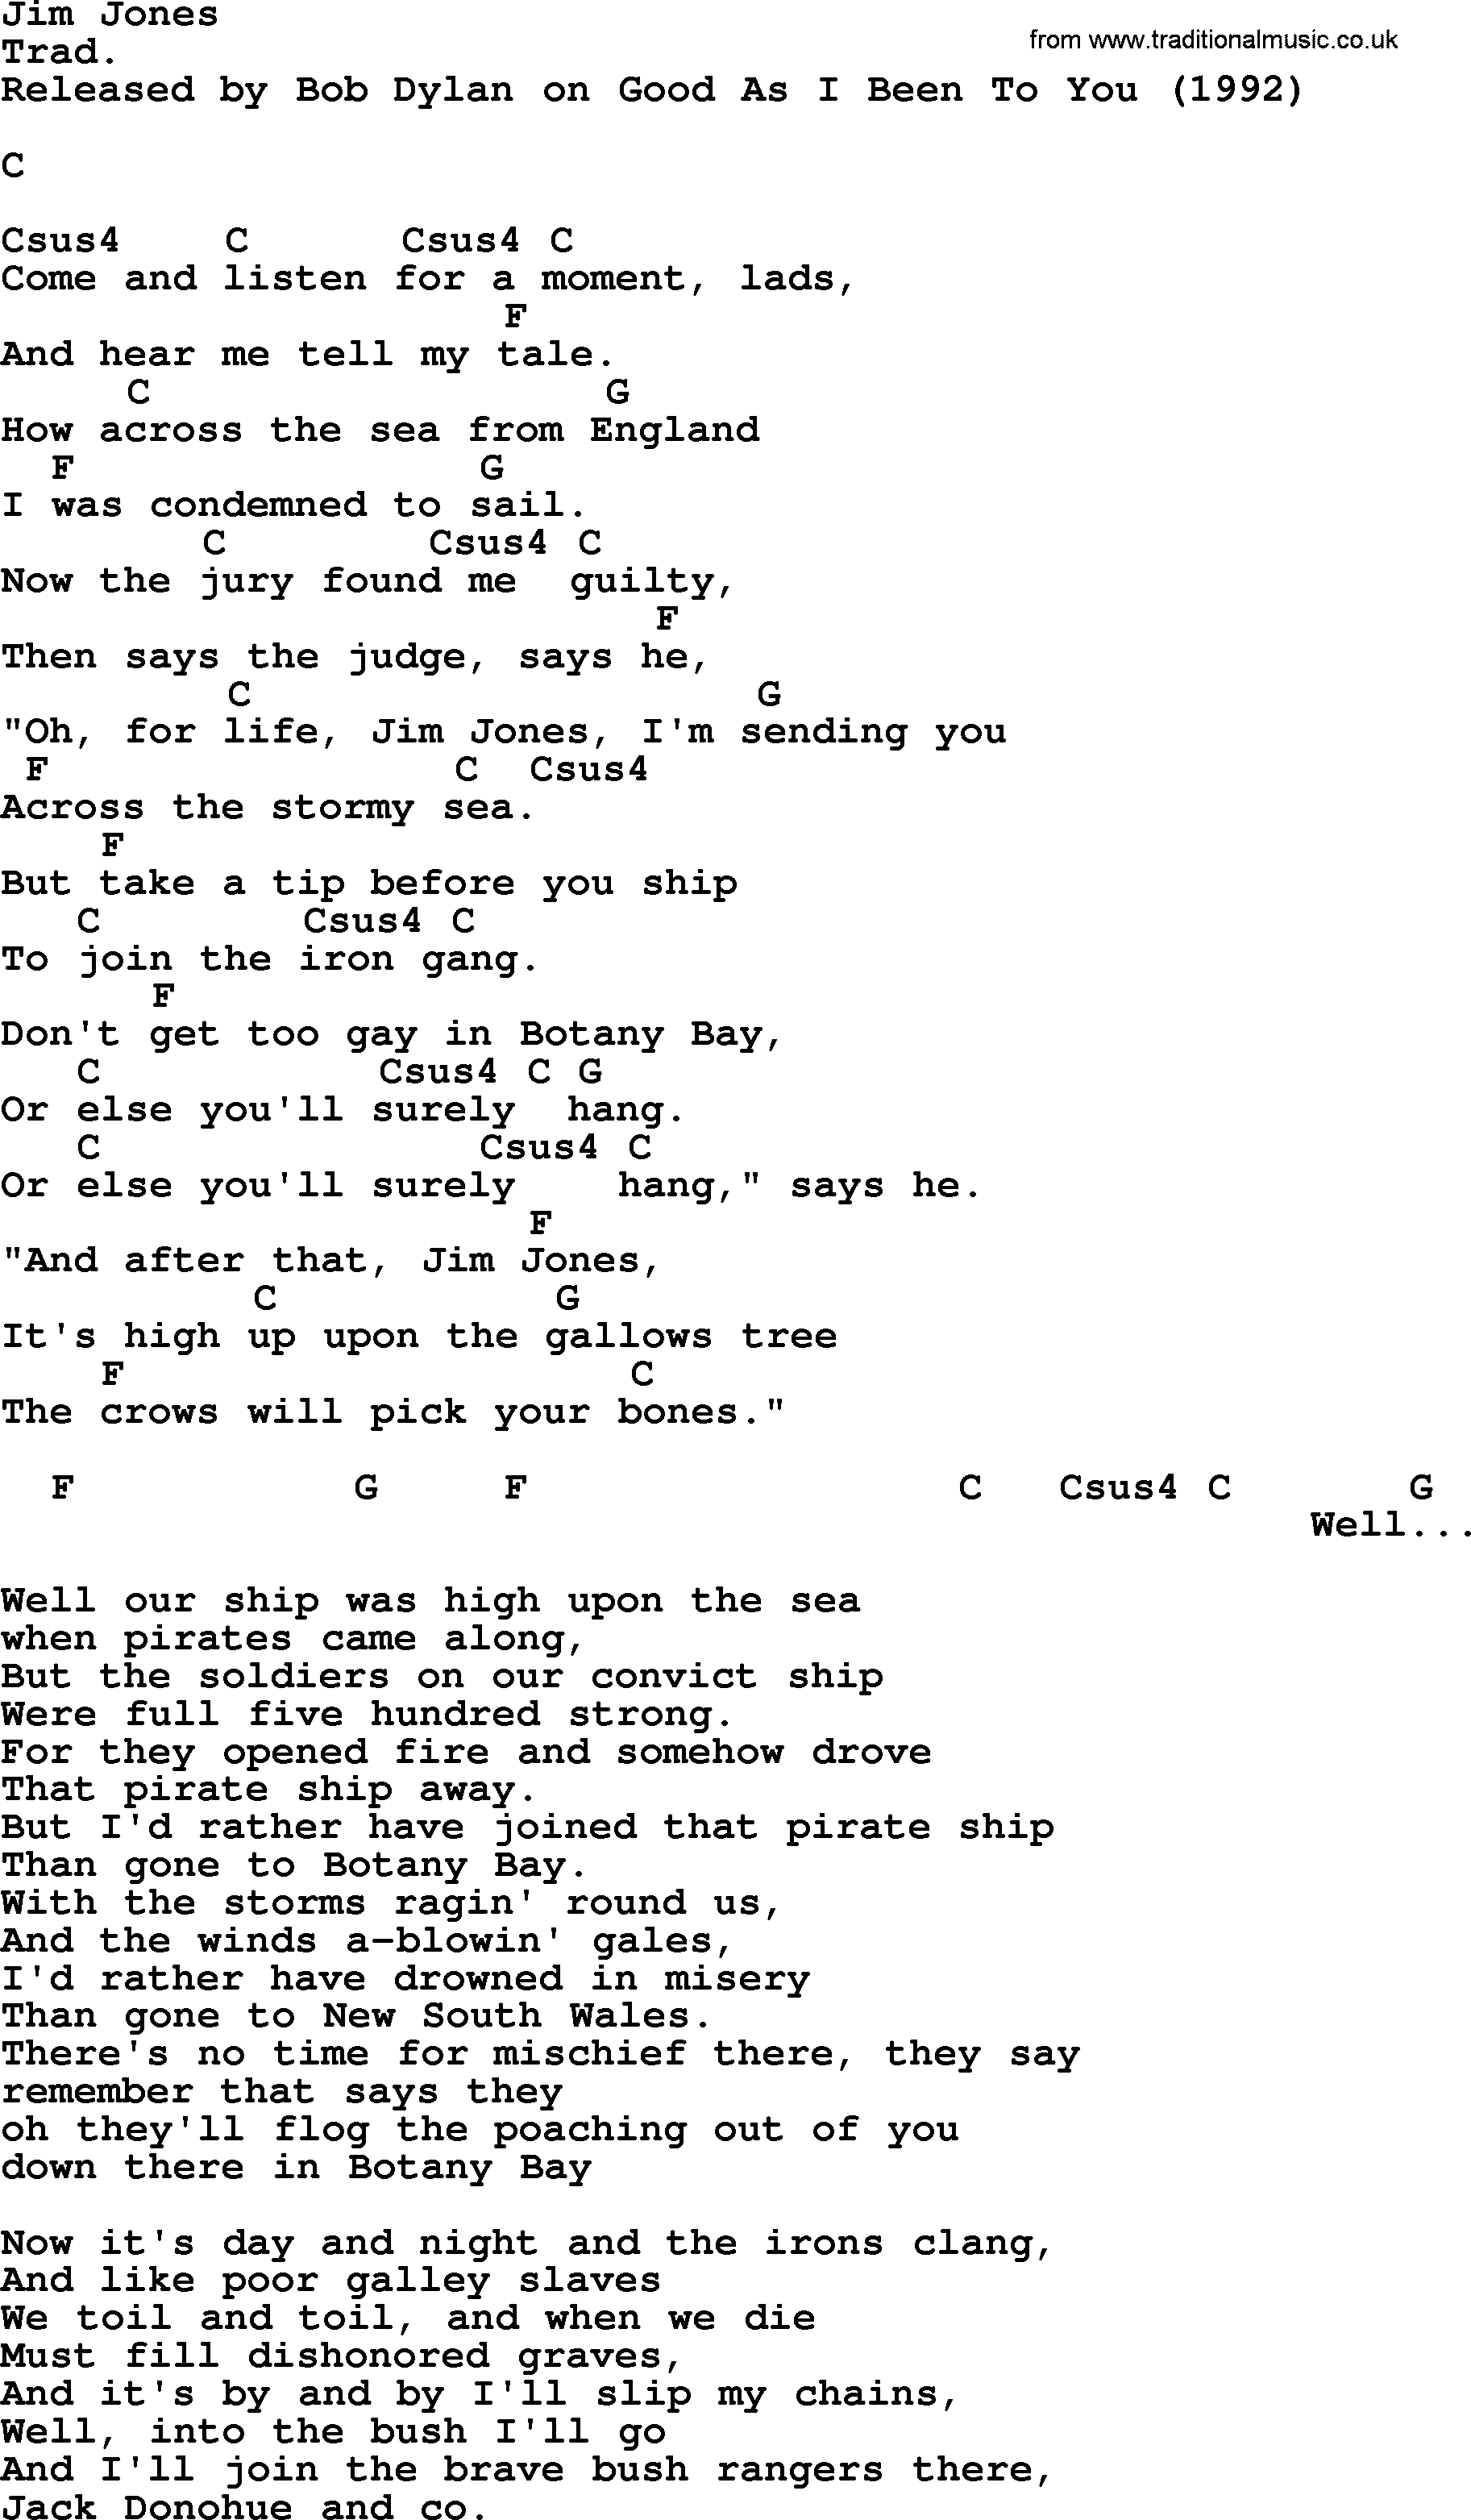 Bob Dylan song, lyrics with chords - Jim Jones